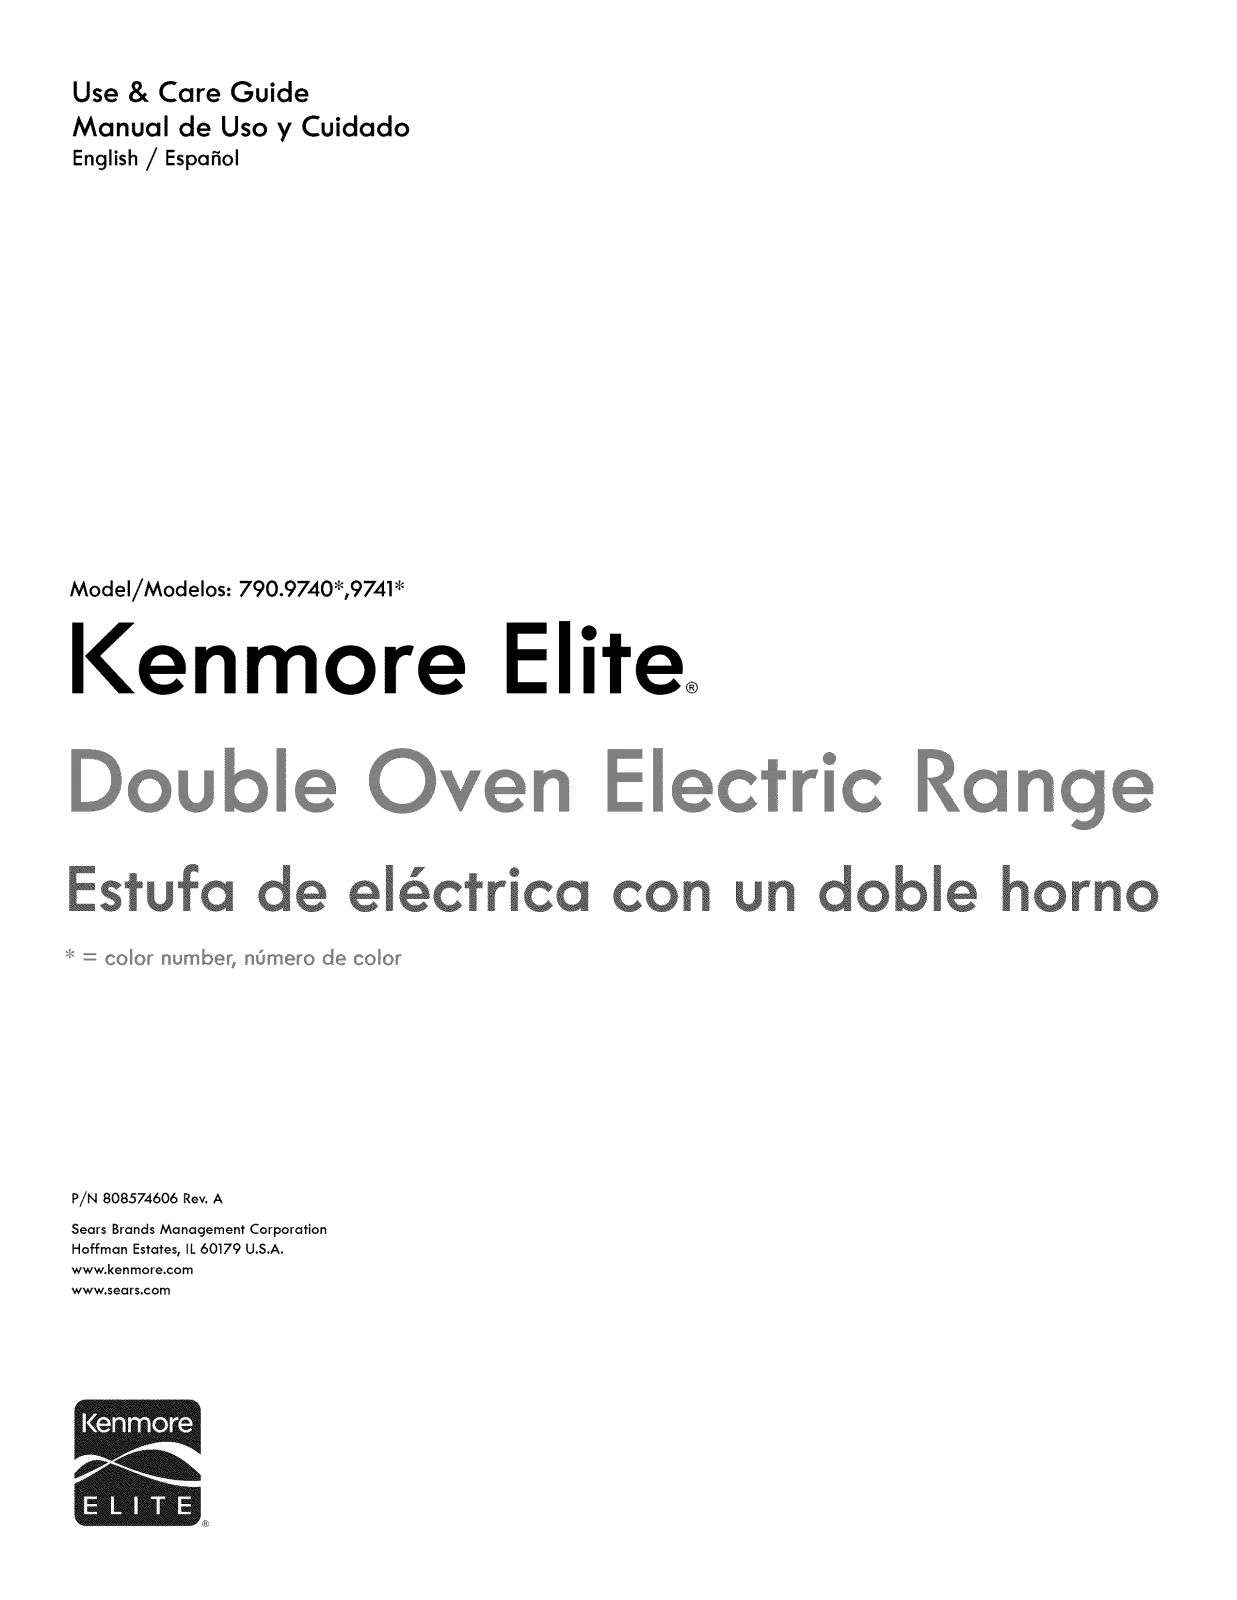 Kenmore Elite 79097413411, 79097413410, 79097403411, 79097403410 Owner’s Manual